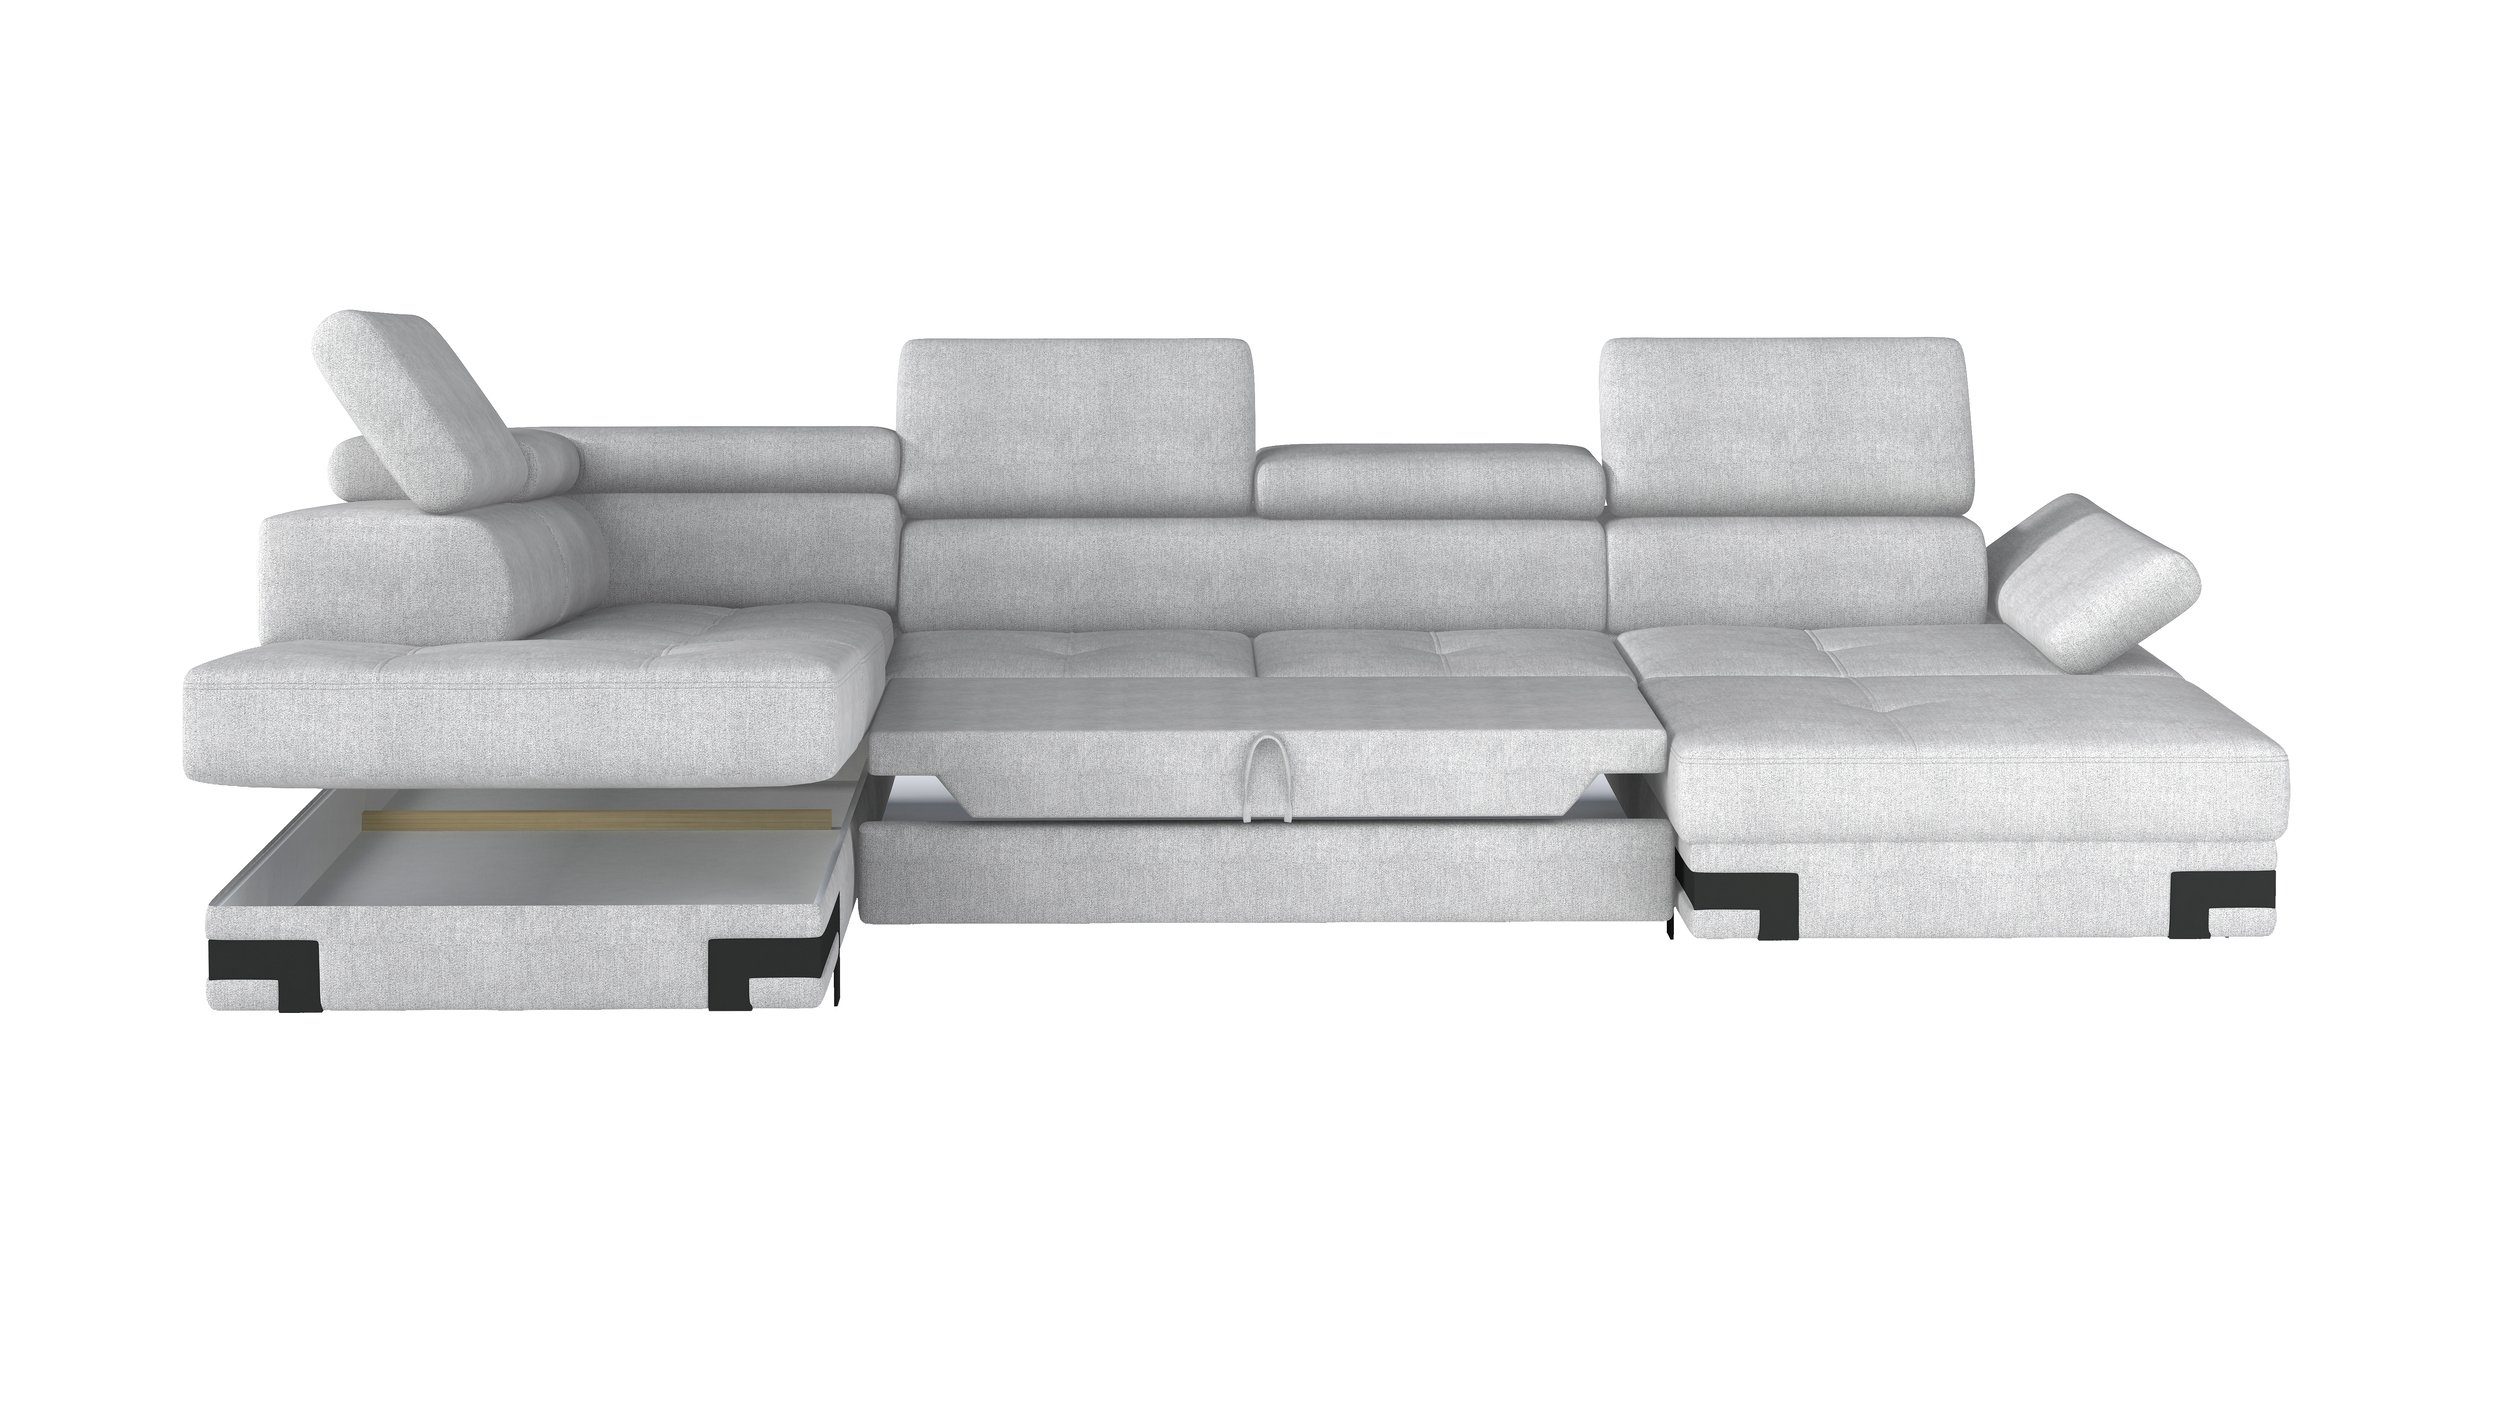 mane links mit Sofa, Relaxfunktion, rechts Design Wohnlandschaft Modern Stylefy XL, bestellbar, U-Form, oder Bettfunktion, Rio